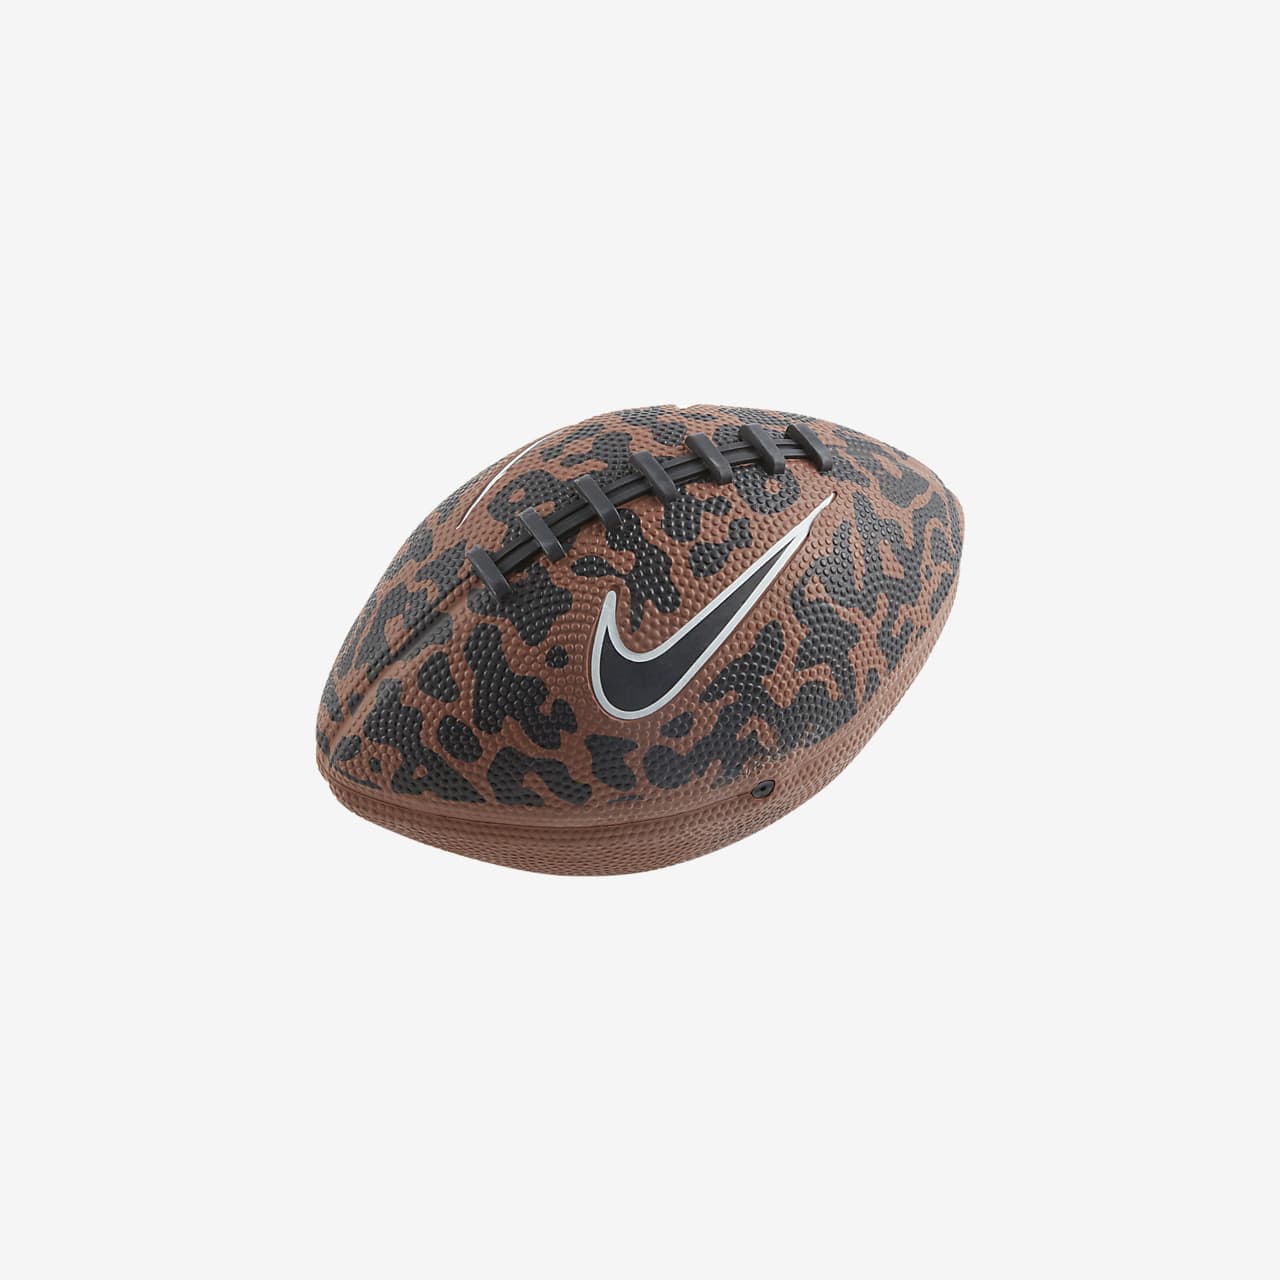 Balón de fútbol americano Nike Mini Spin 4.0. Nike.com